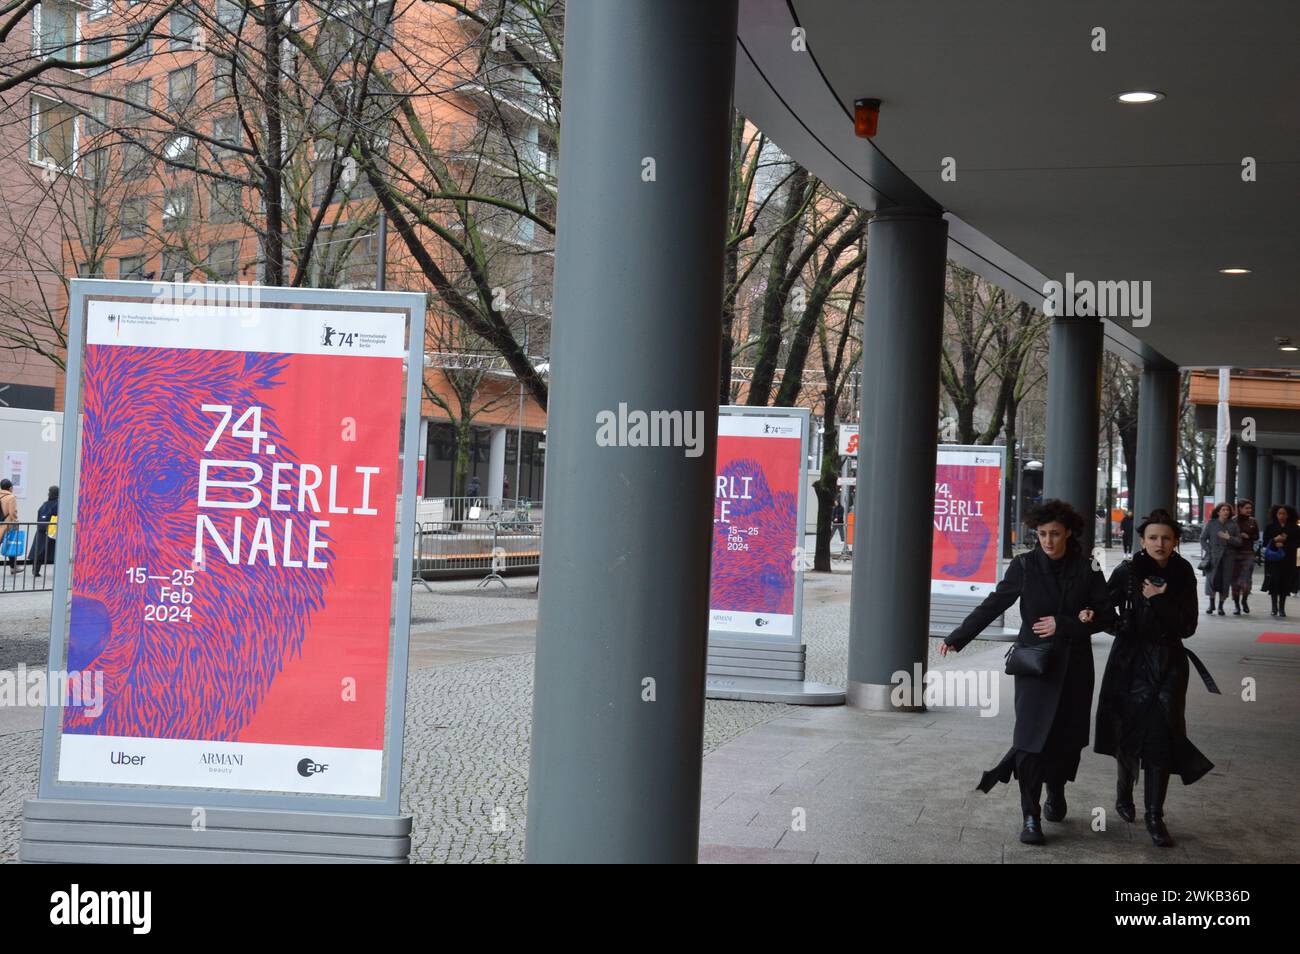 Berlin, Deutschland - 19. Februar 2024 - Berlinale 2024 - Internationales Filmfestival am Potsdamer Platz. (Foto: Markku Rainer Peltonen) Stockfoto